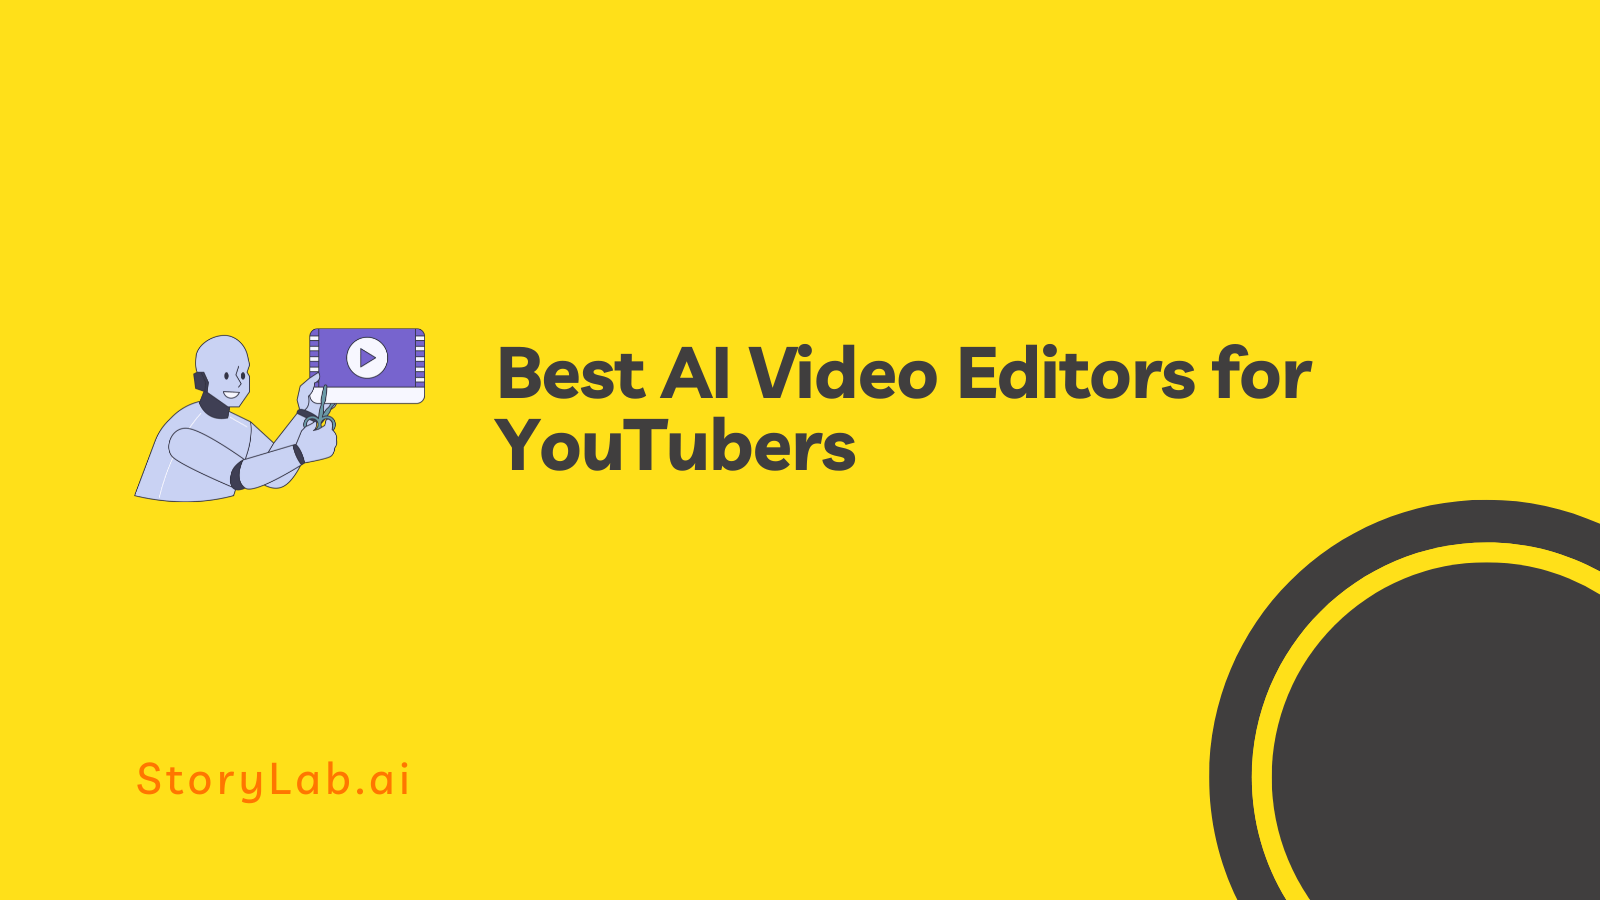 Beste AI-video-editors voor YouTubers